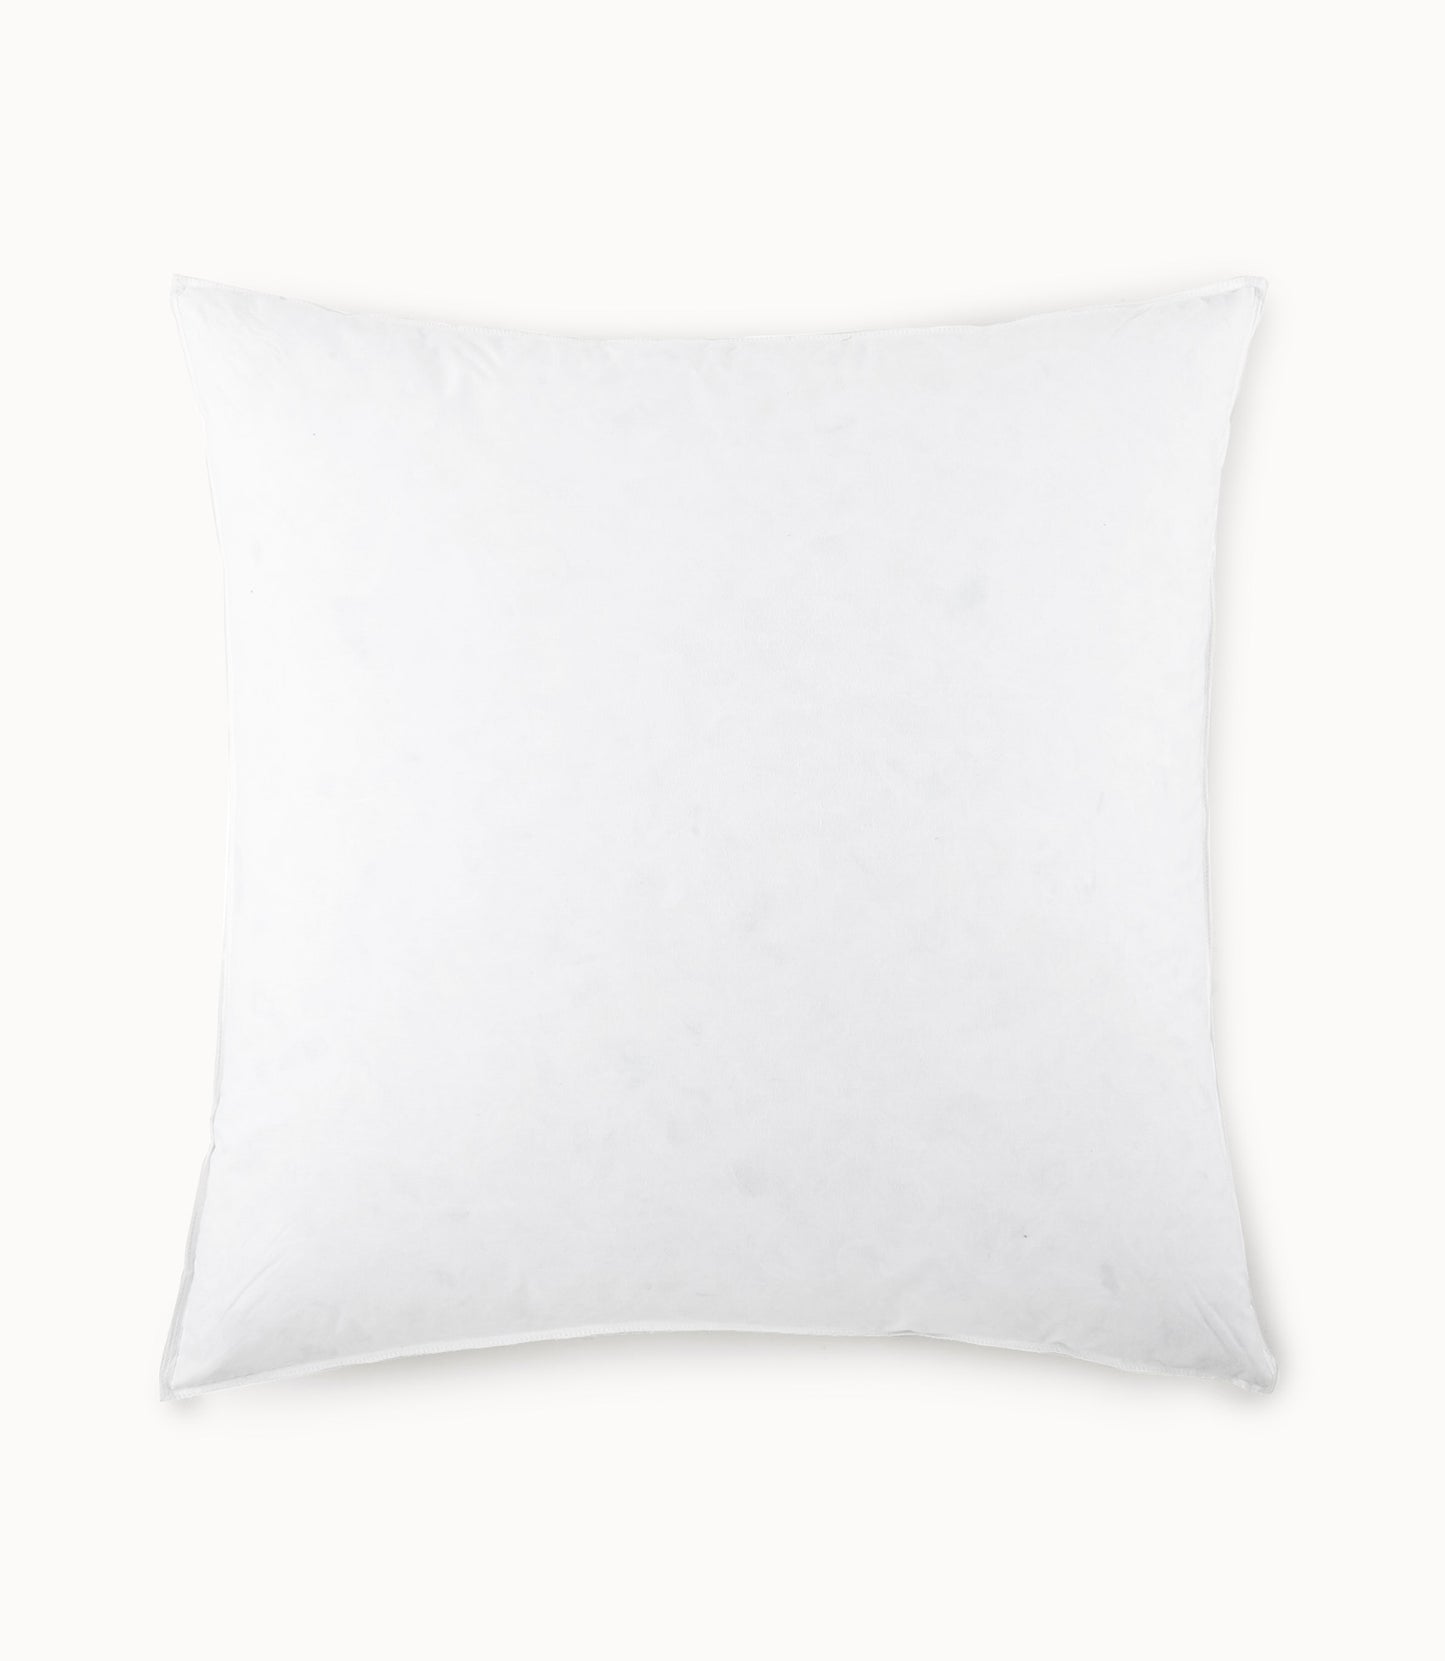 Throw Pillow Insert - Set of 2 Down Alternative Fill - Decorative